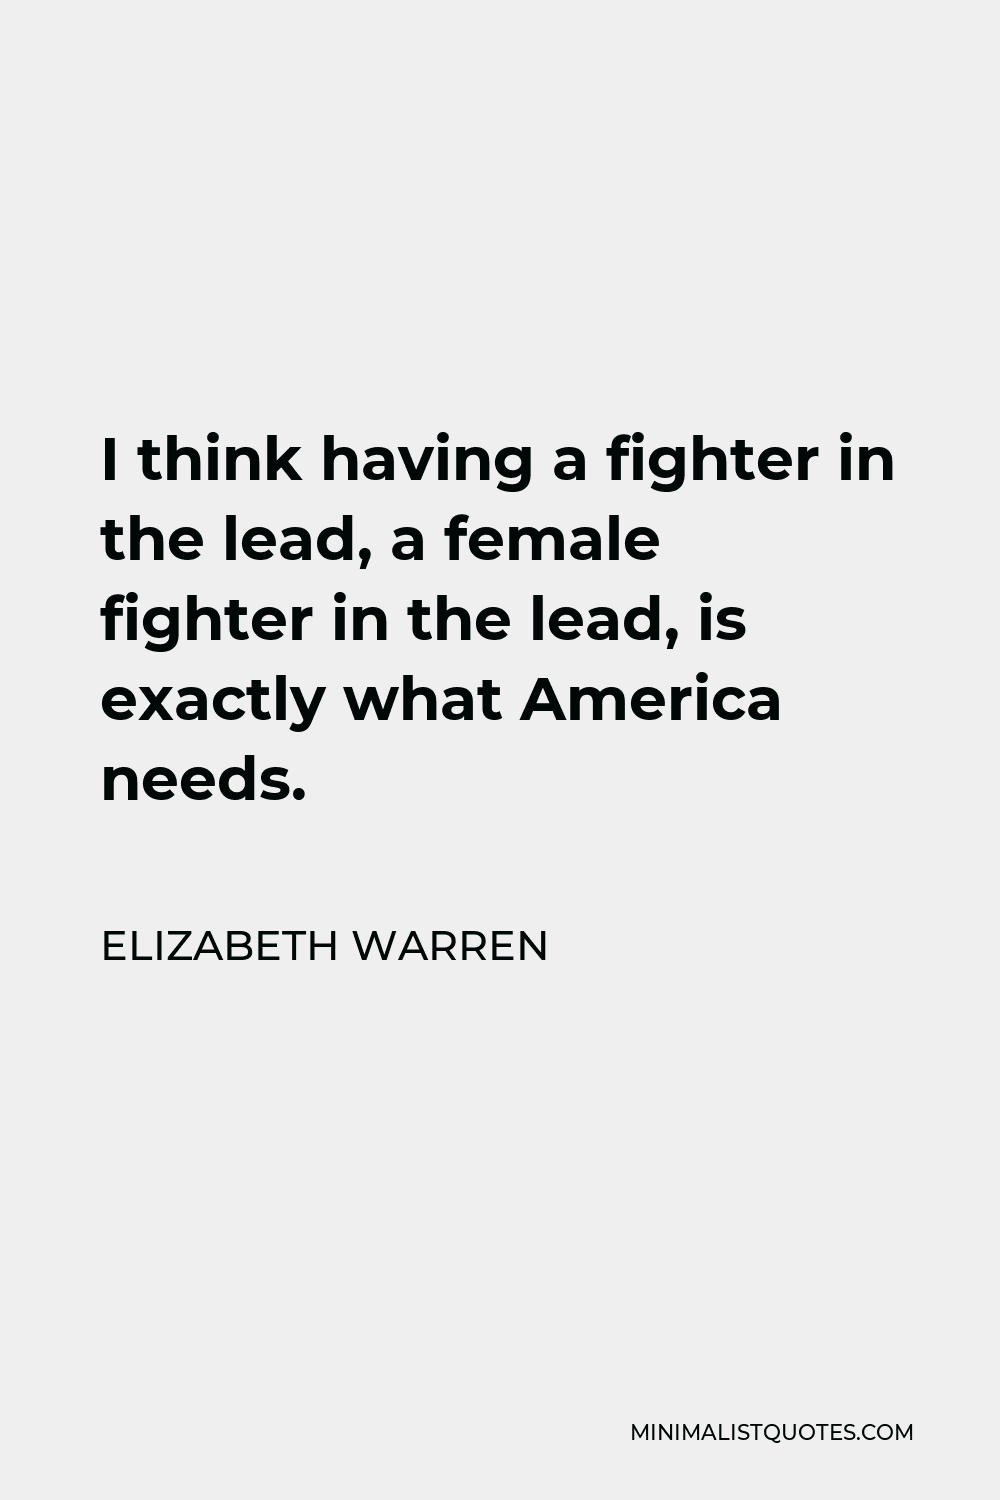 Elizabeth Warren Quote - I think having a fighter in the lead, a female fighter in the lead, is exactly what America needs.